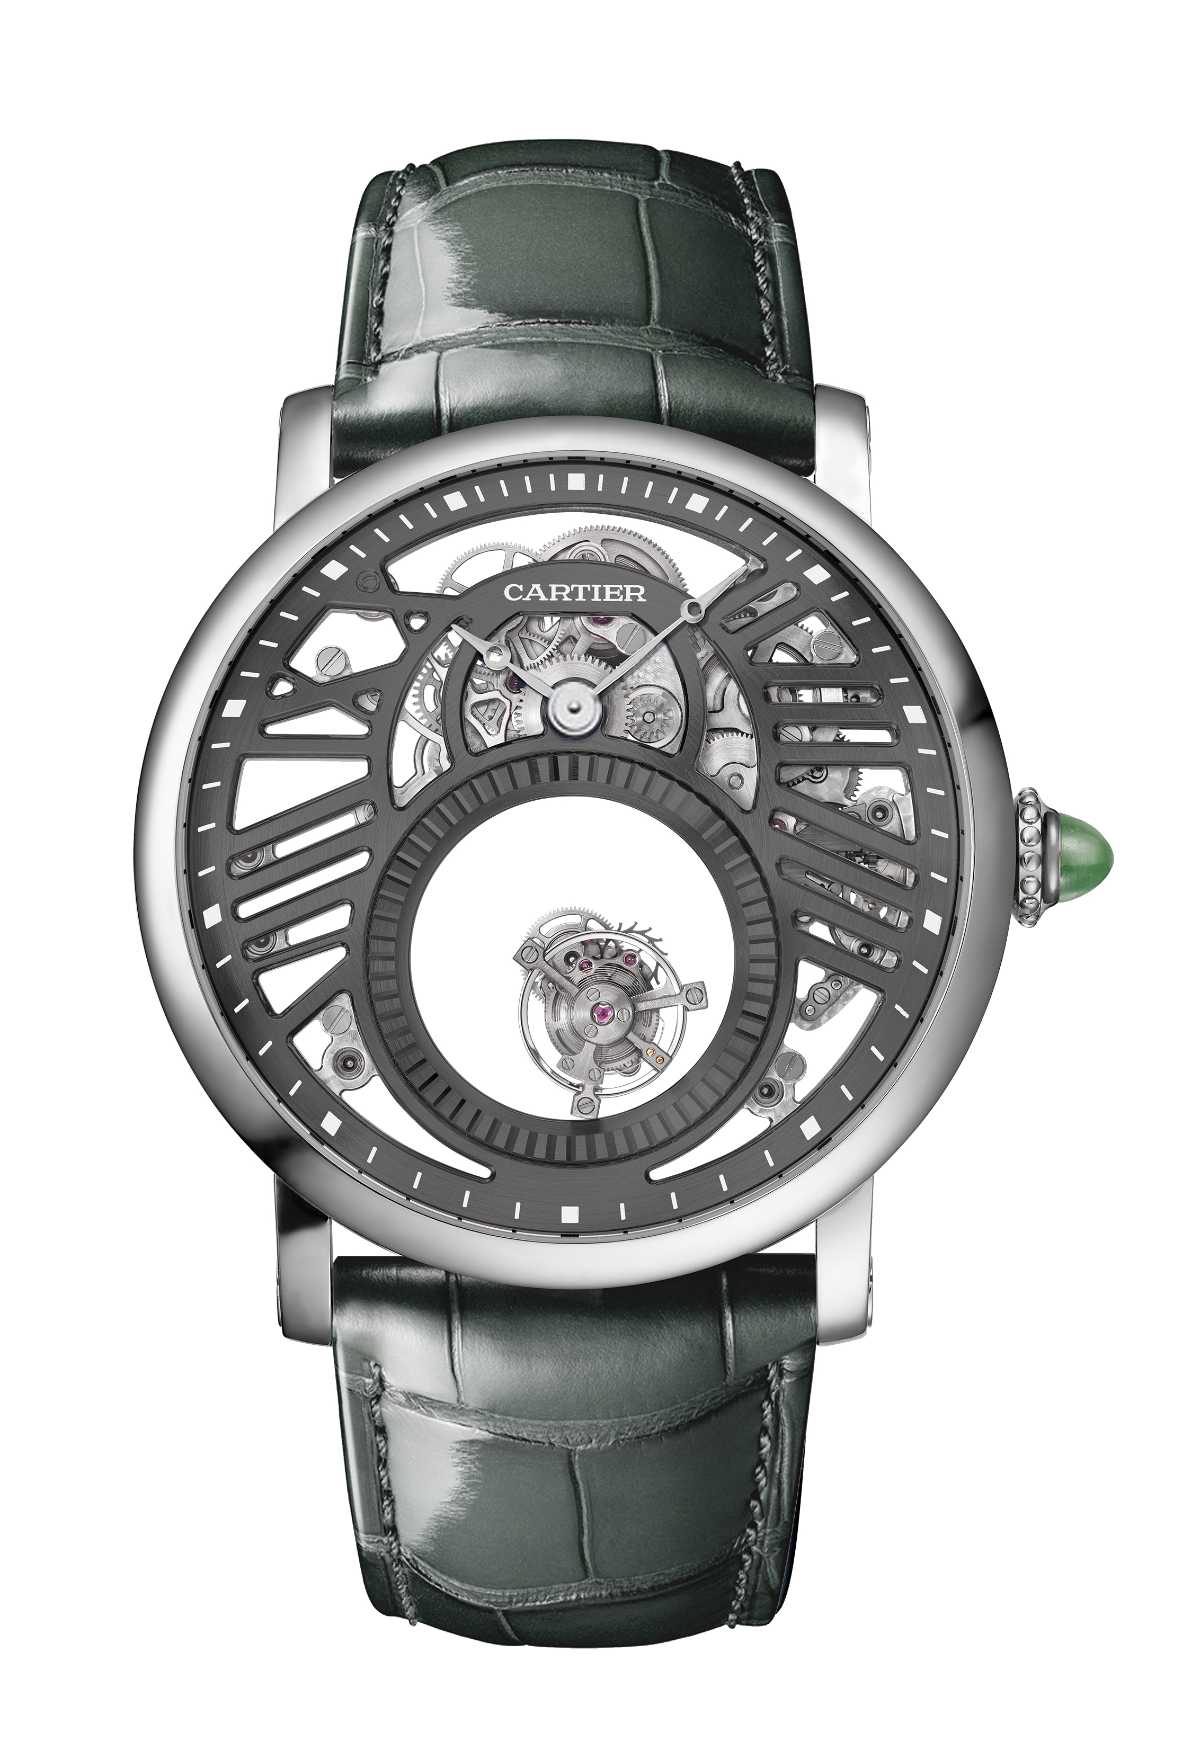 Pre-Watches & Wonders 2021: Cartier's Fine Watchmaking